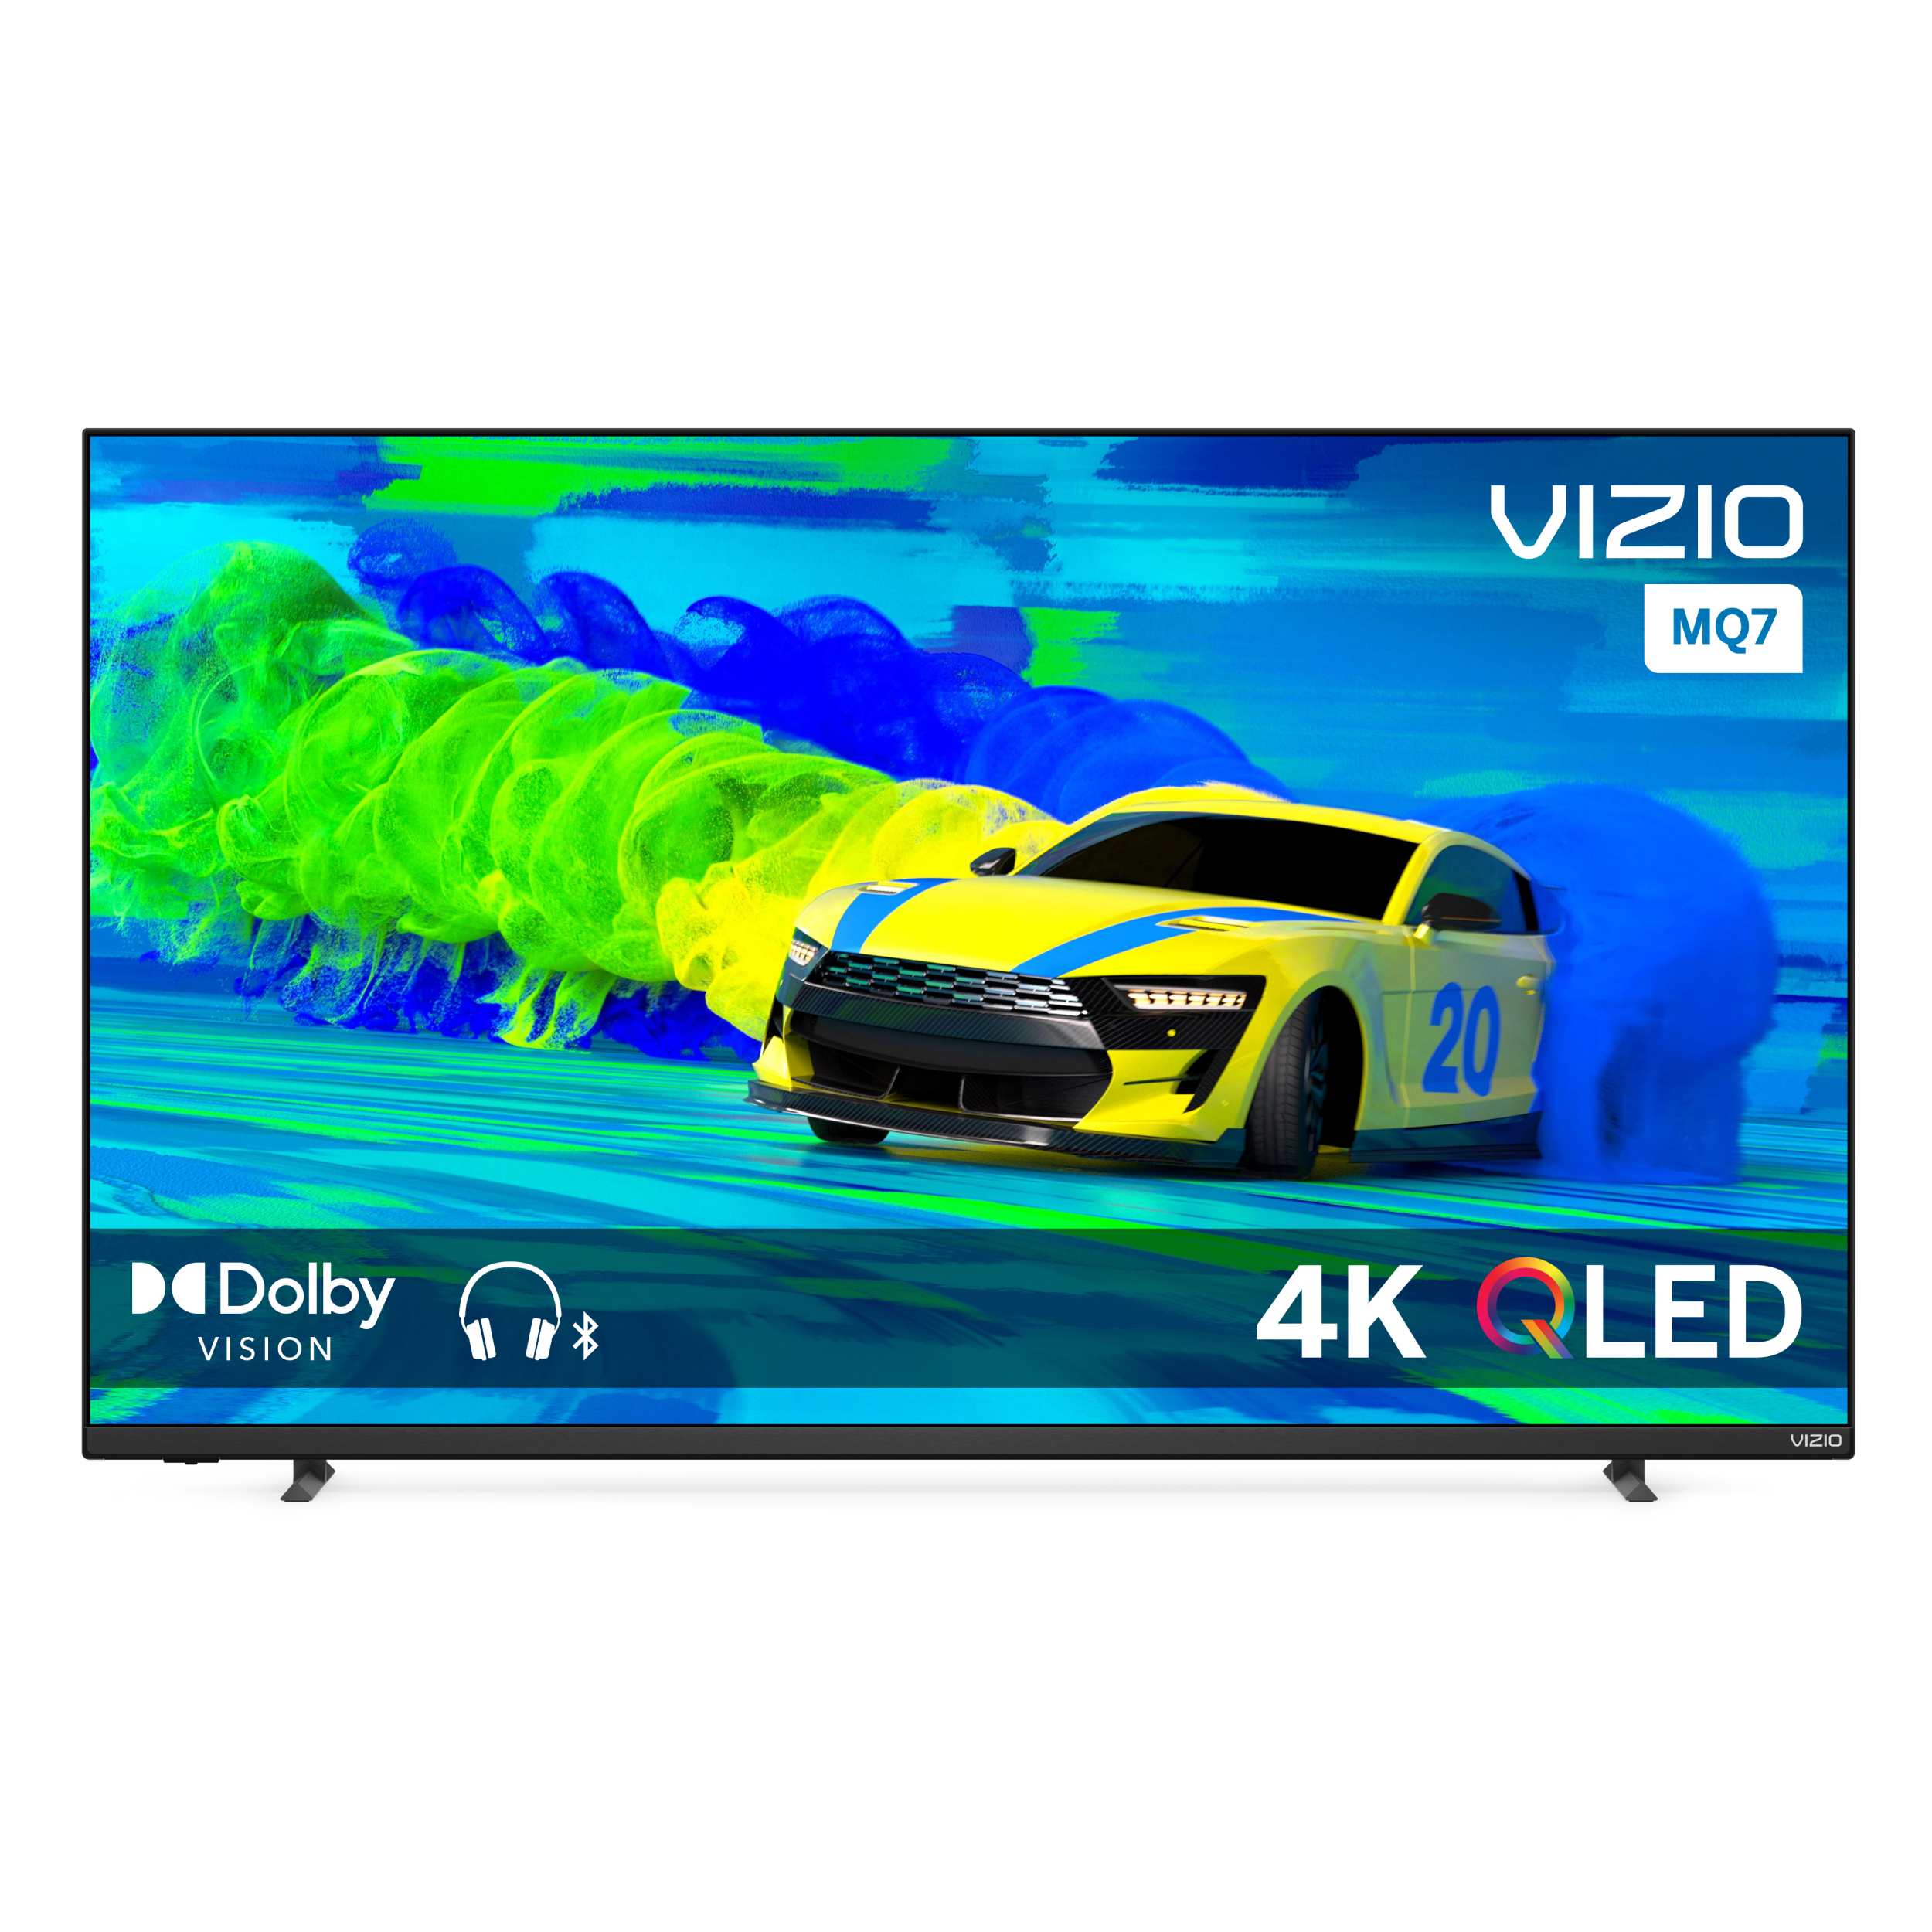 VIZIO 50" Class M7 Series 4K QLED HDR Smart TV M50Q7-J01 - image 1 of 24